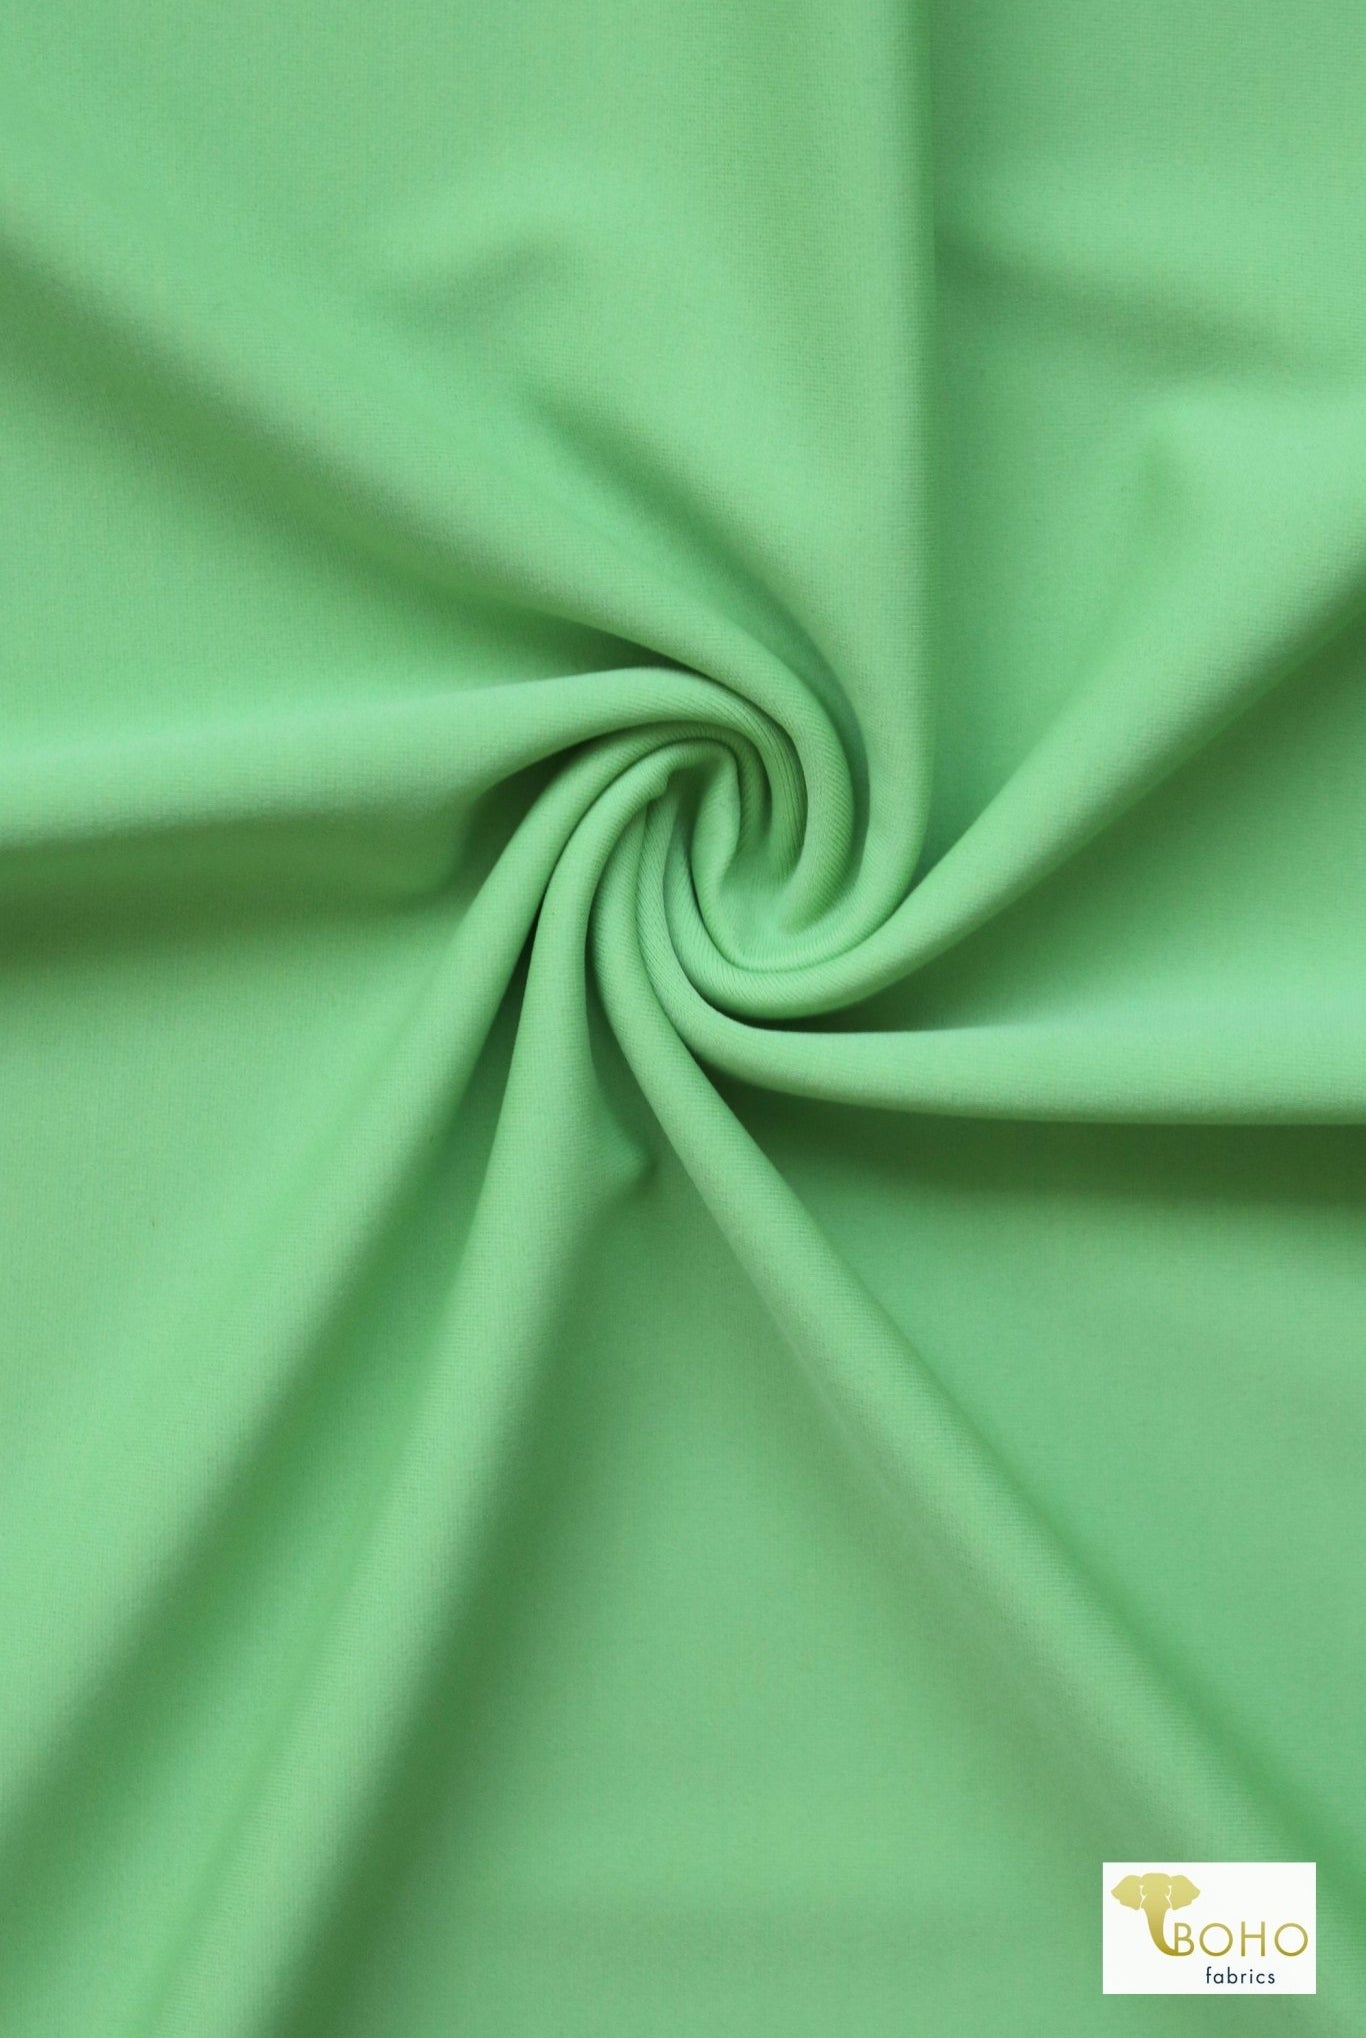 Mint Green, Solid Swim Knit Fabric. - Boho Fabrics